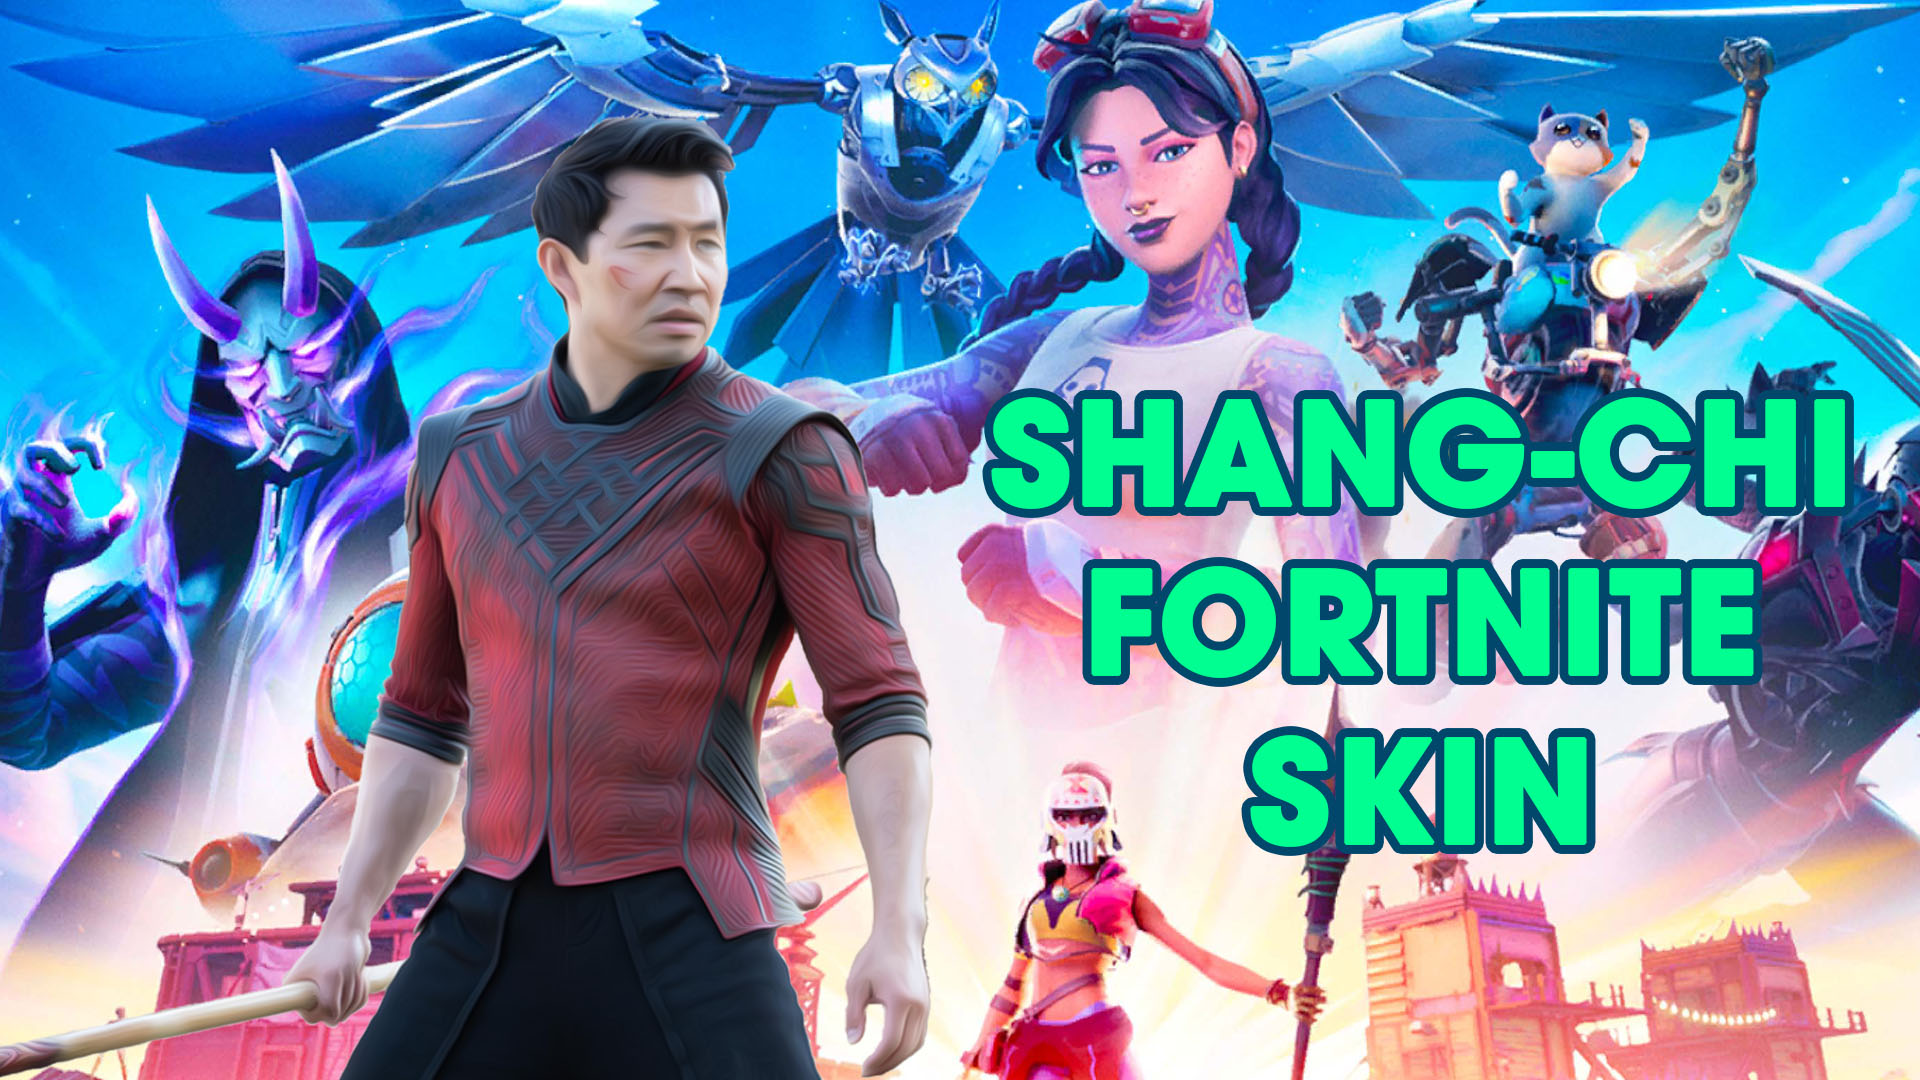 Shang-chi fortnite skin release date